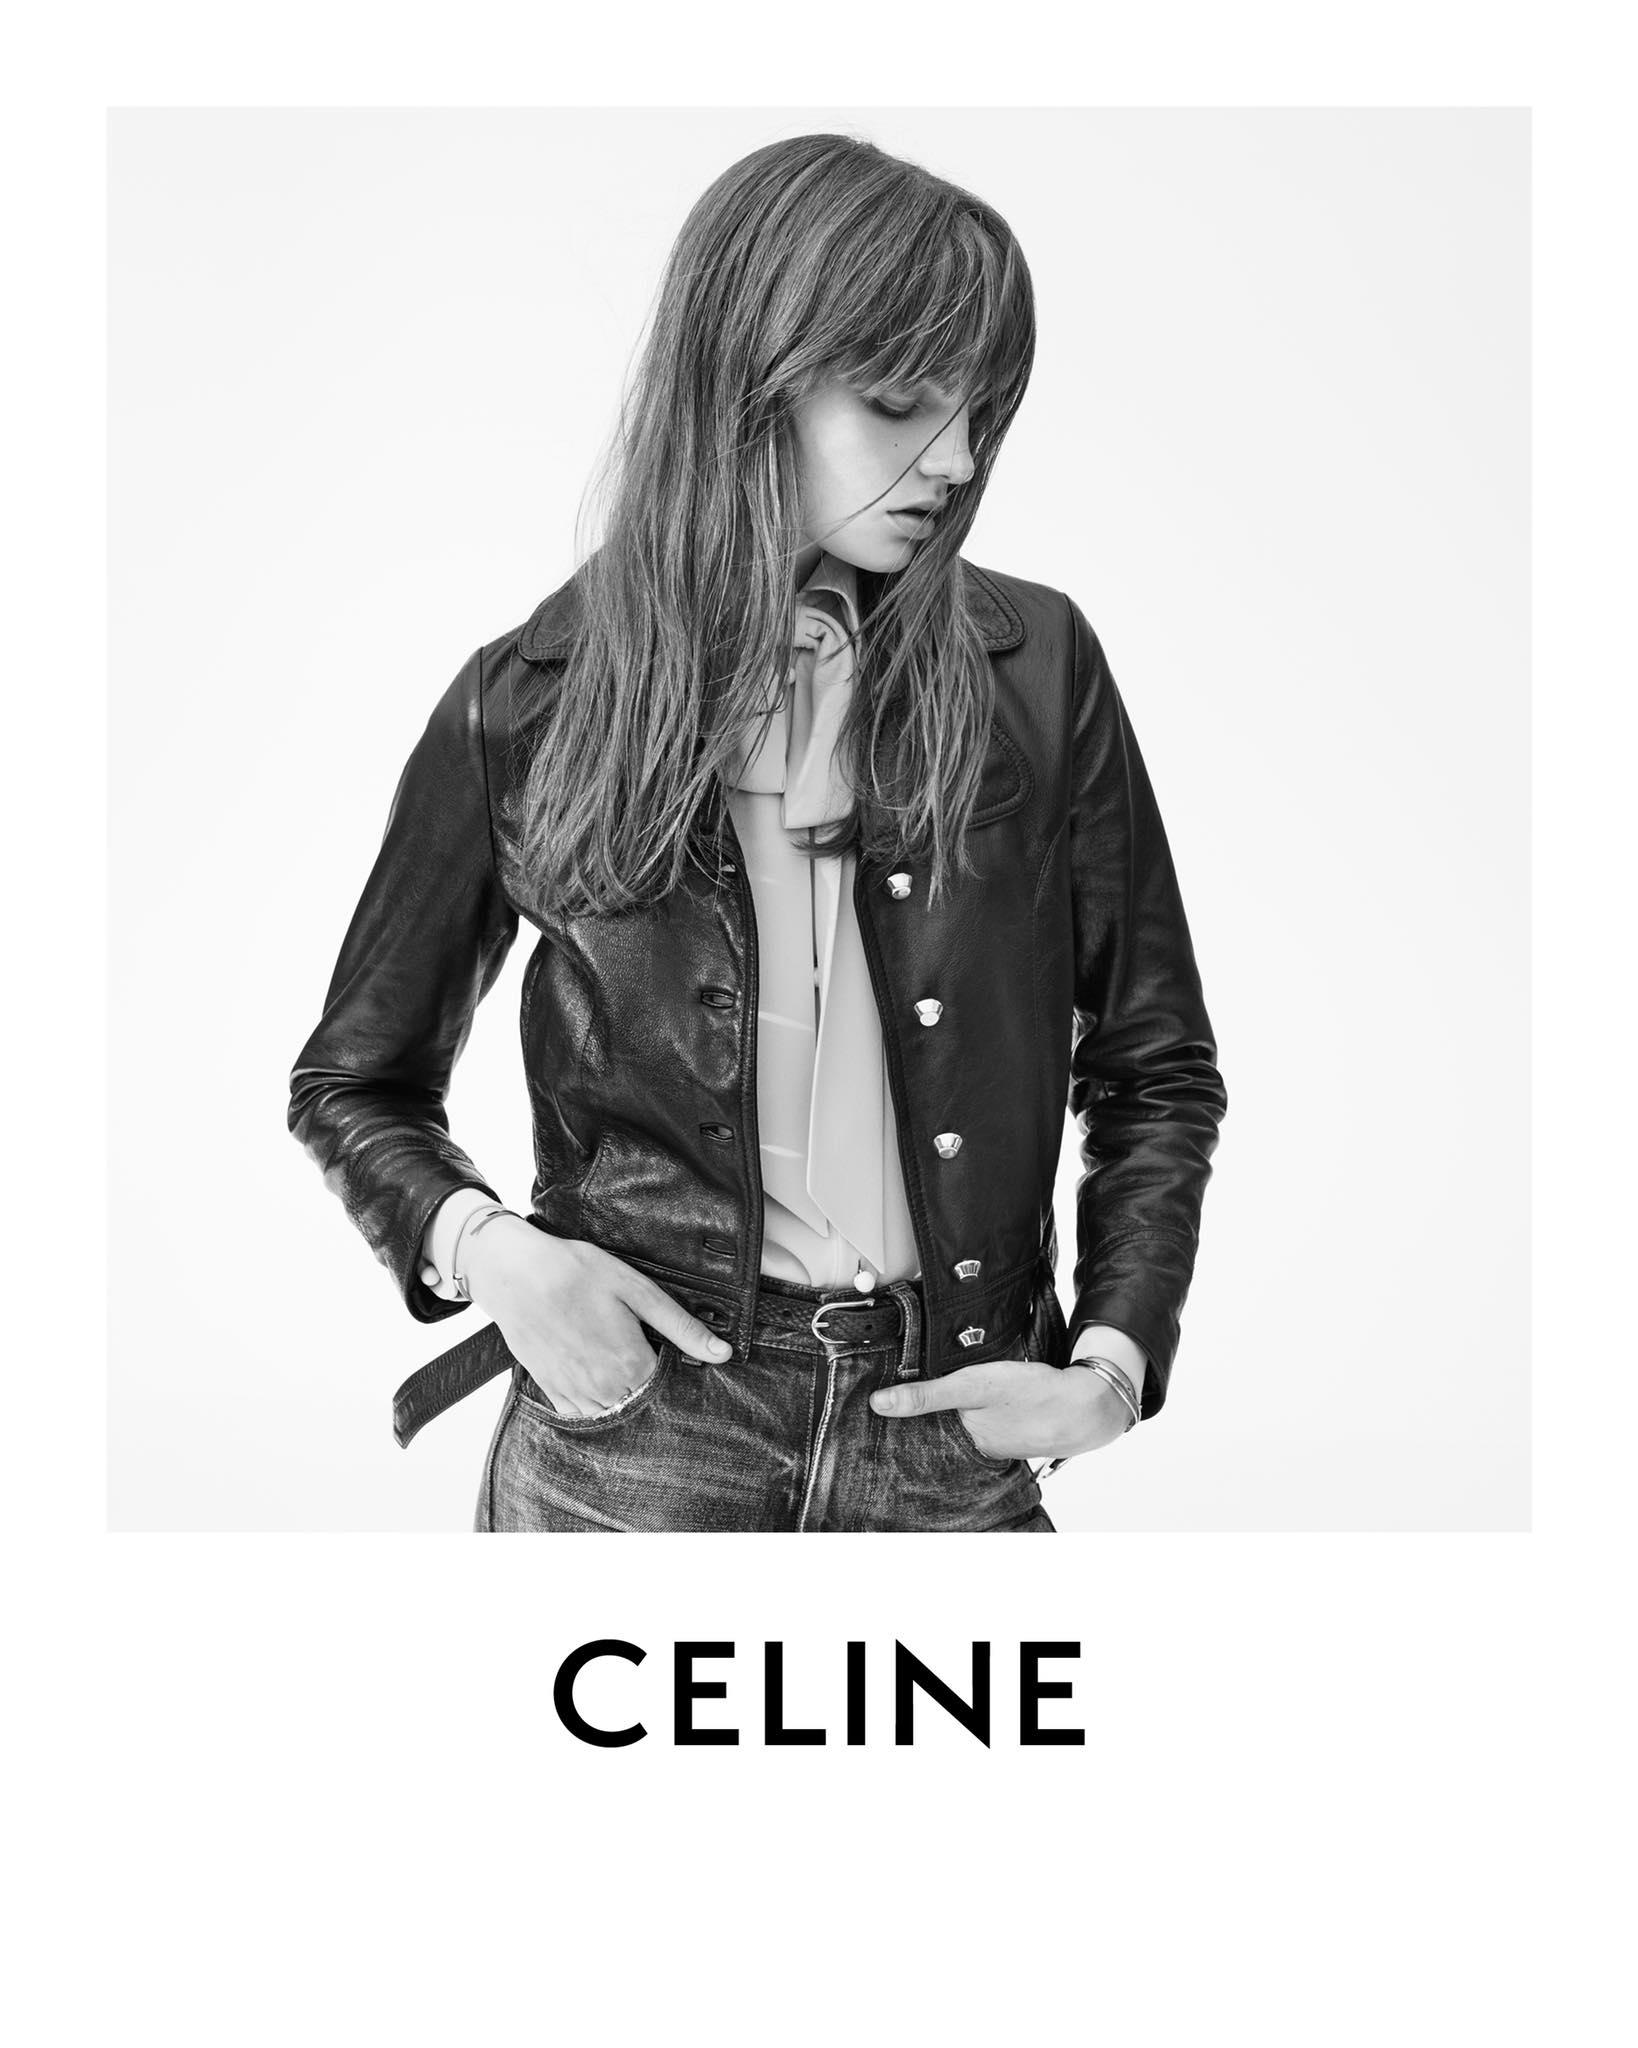 Celine Fall 2020 Ad Campaign | The Impression